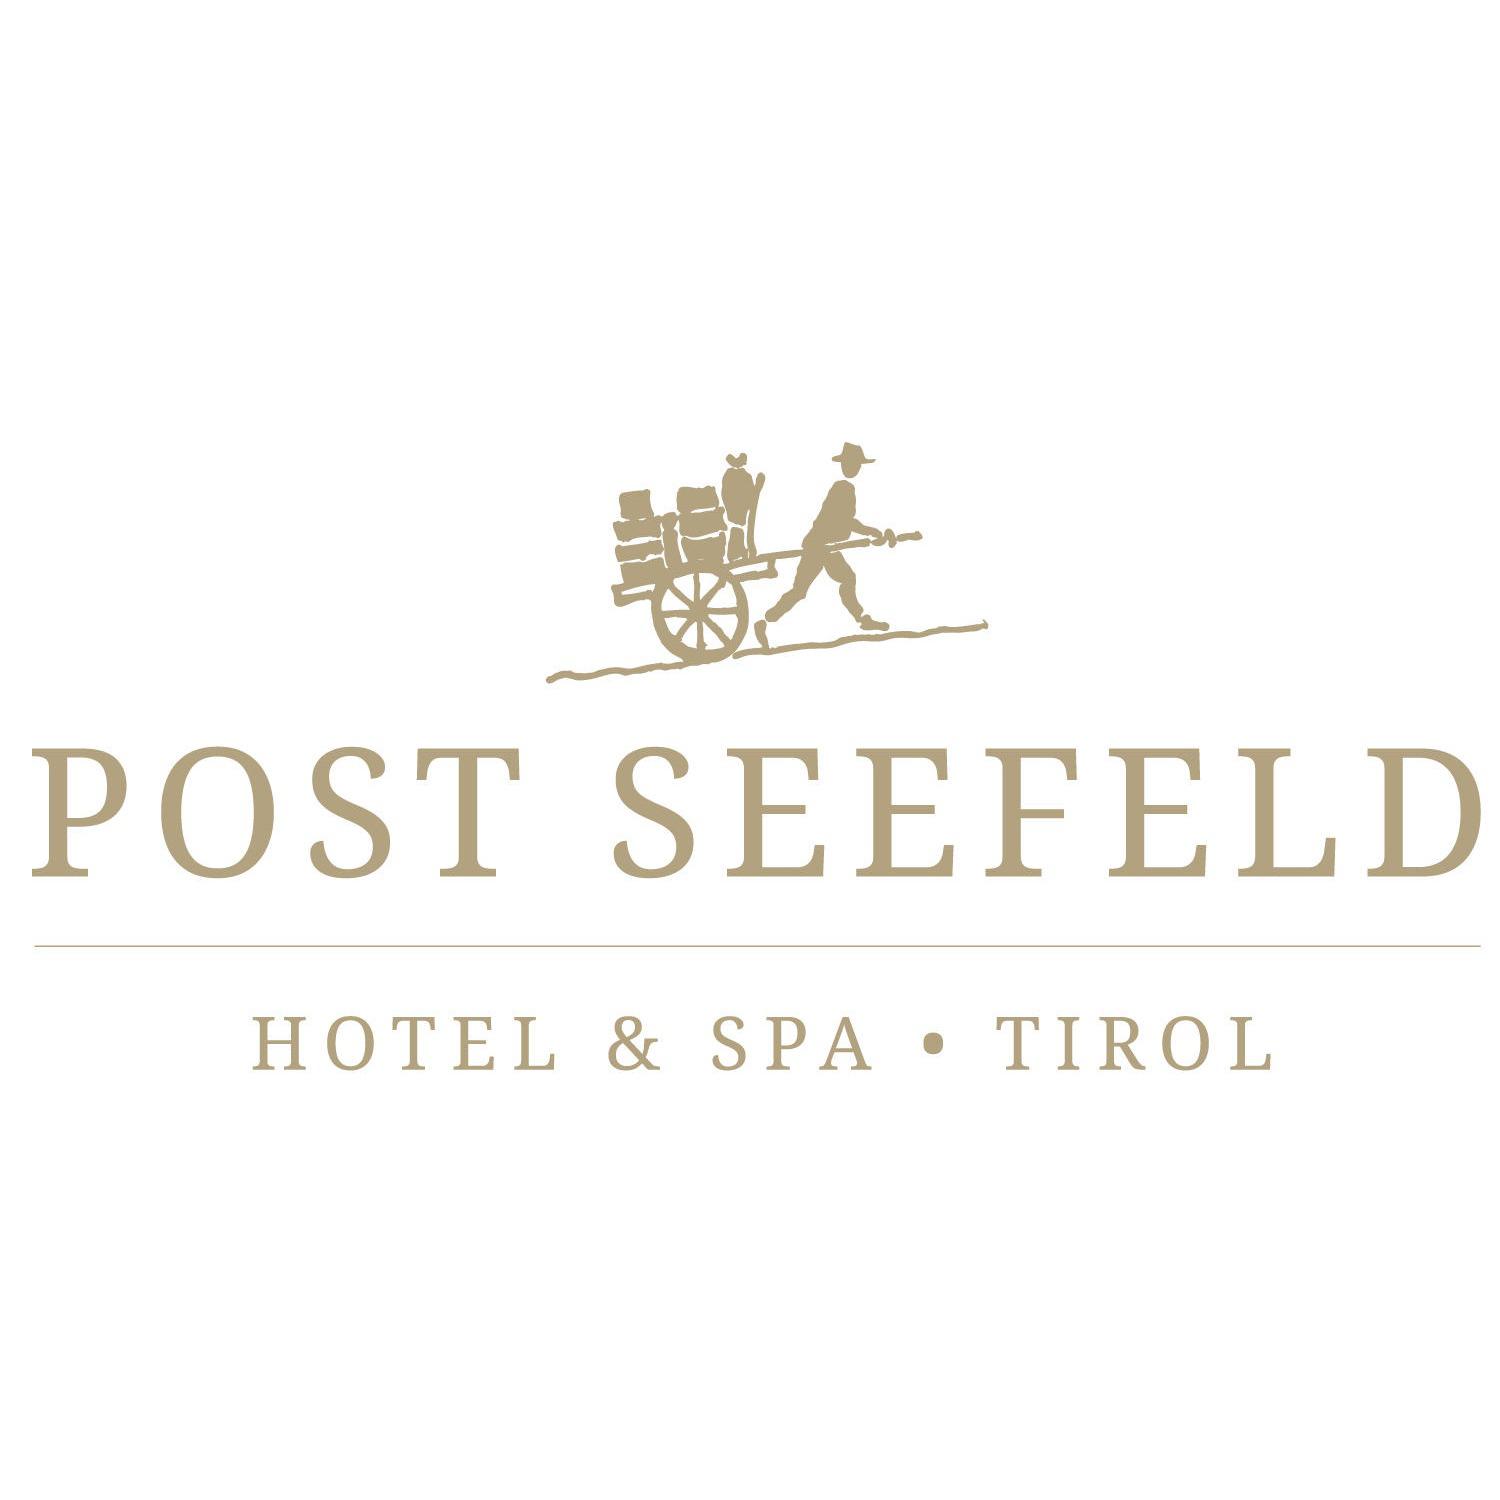 Post Seefeld Hotel & Spa Logo